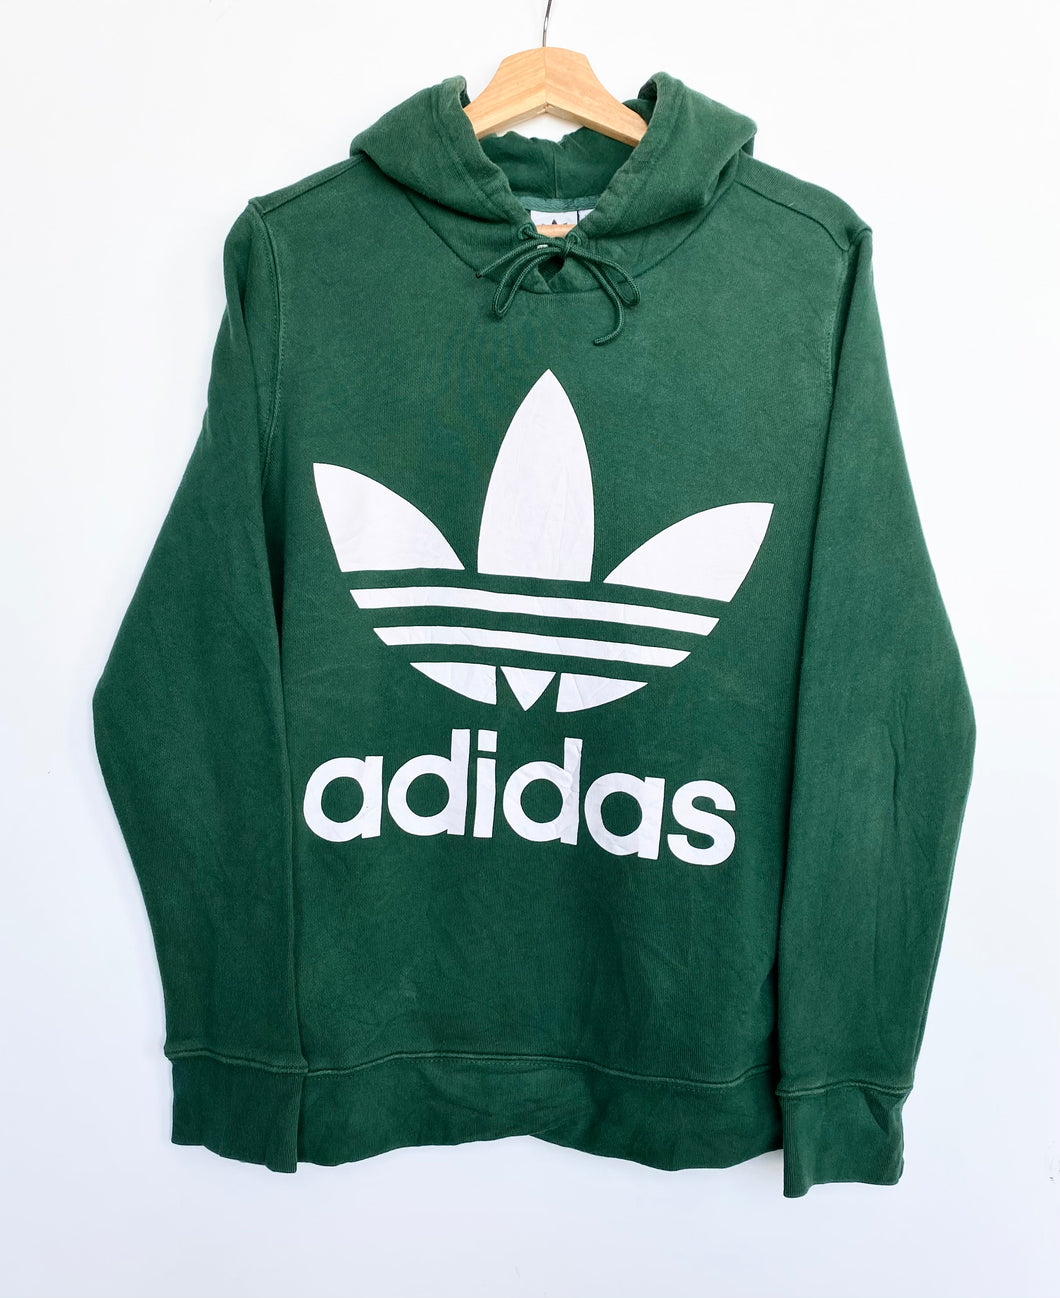 Adidas Originals hoodie (M)